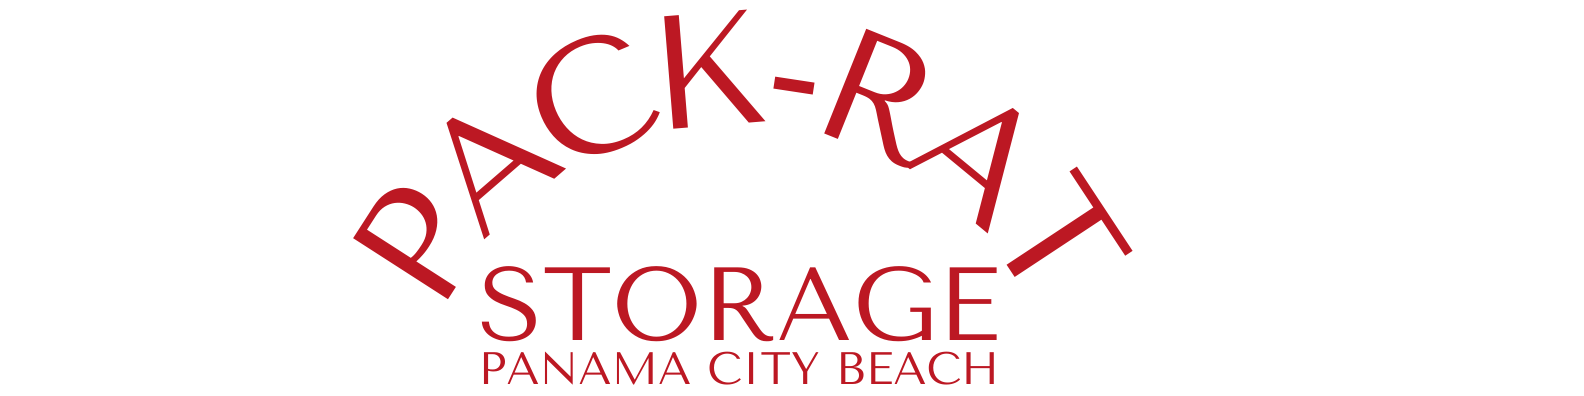 Pack Rat Storage Panama City Beach FL Logo